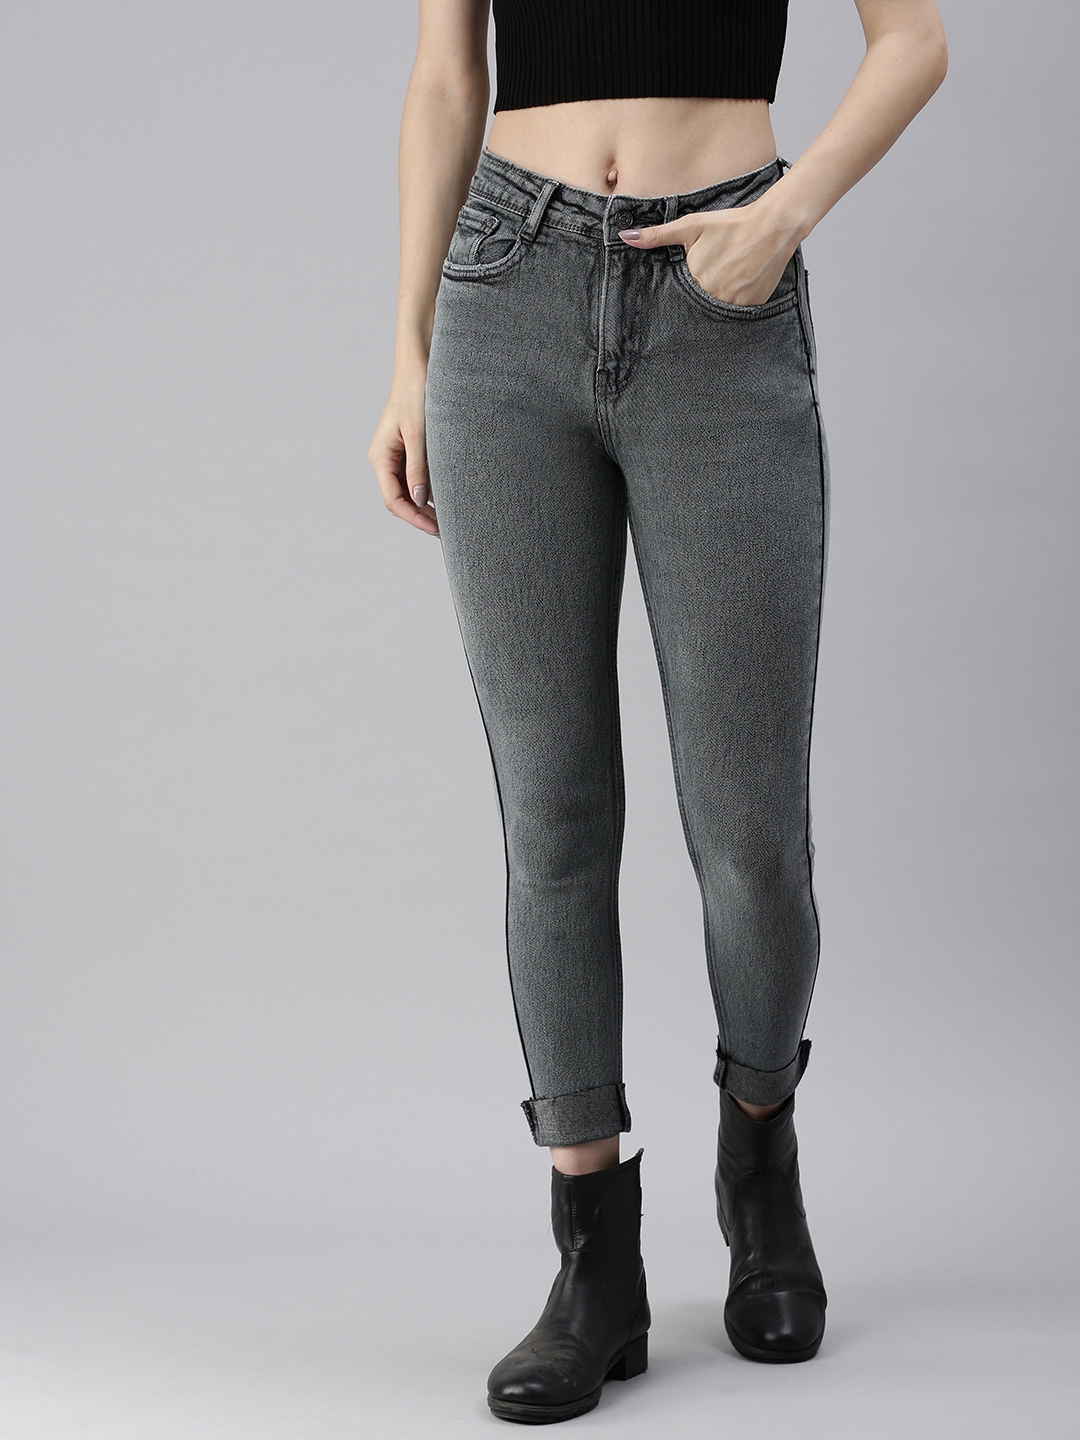 Showoff | SHOWOFF Women's Mildly Distressed Grey Skinny Fit Denim Jeans